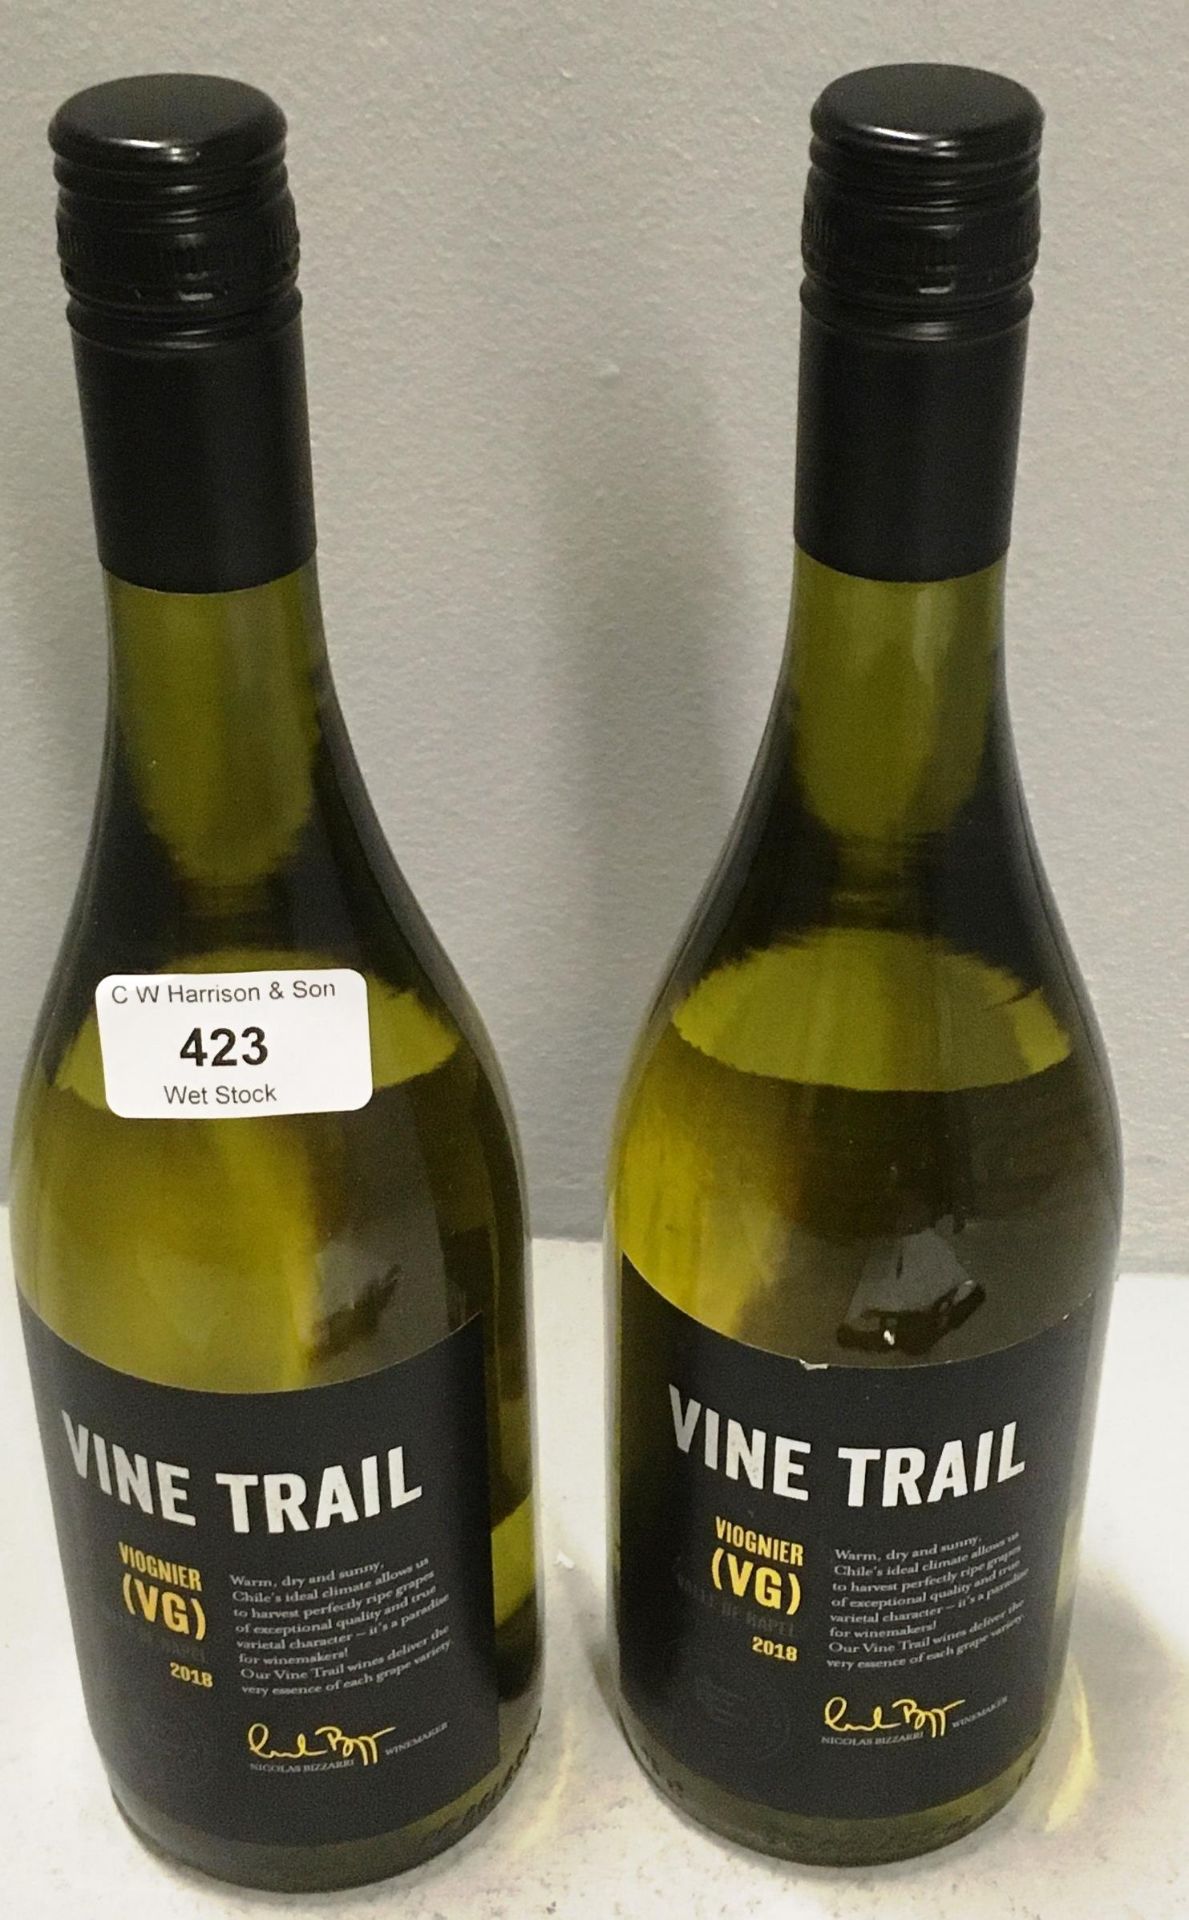 7 x 750ml bottles of Vine Trail Viognier 2018 Valle De Rapel